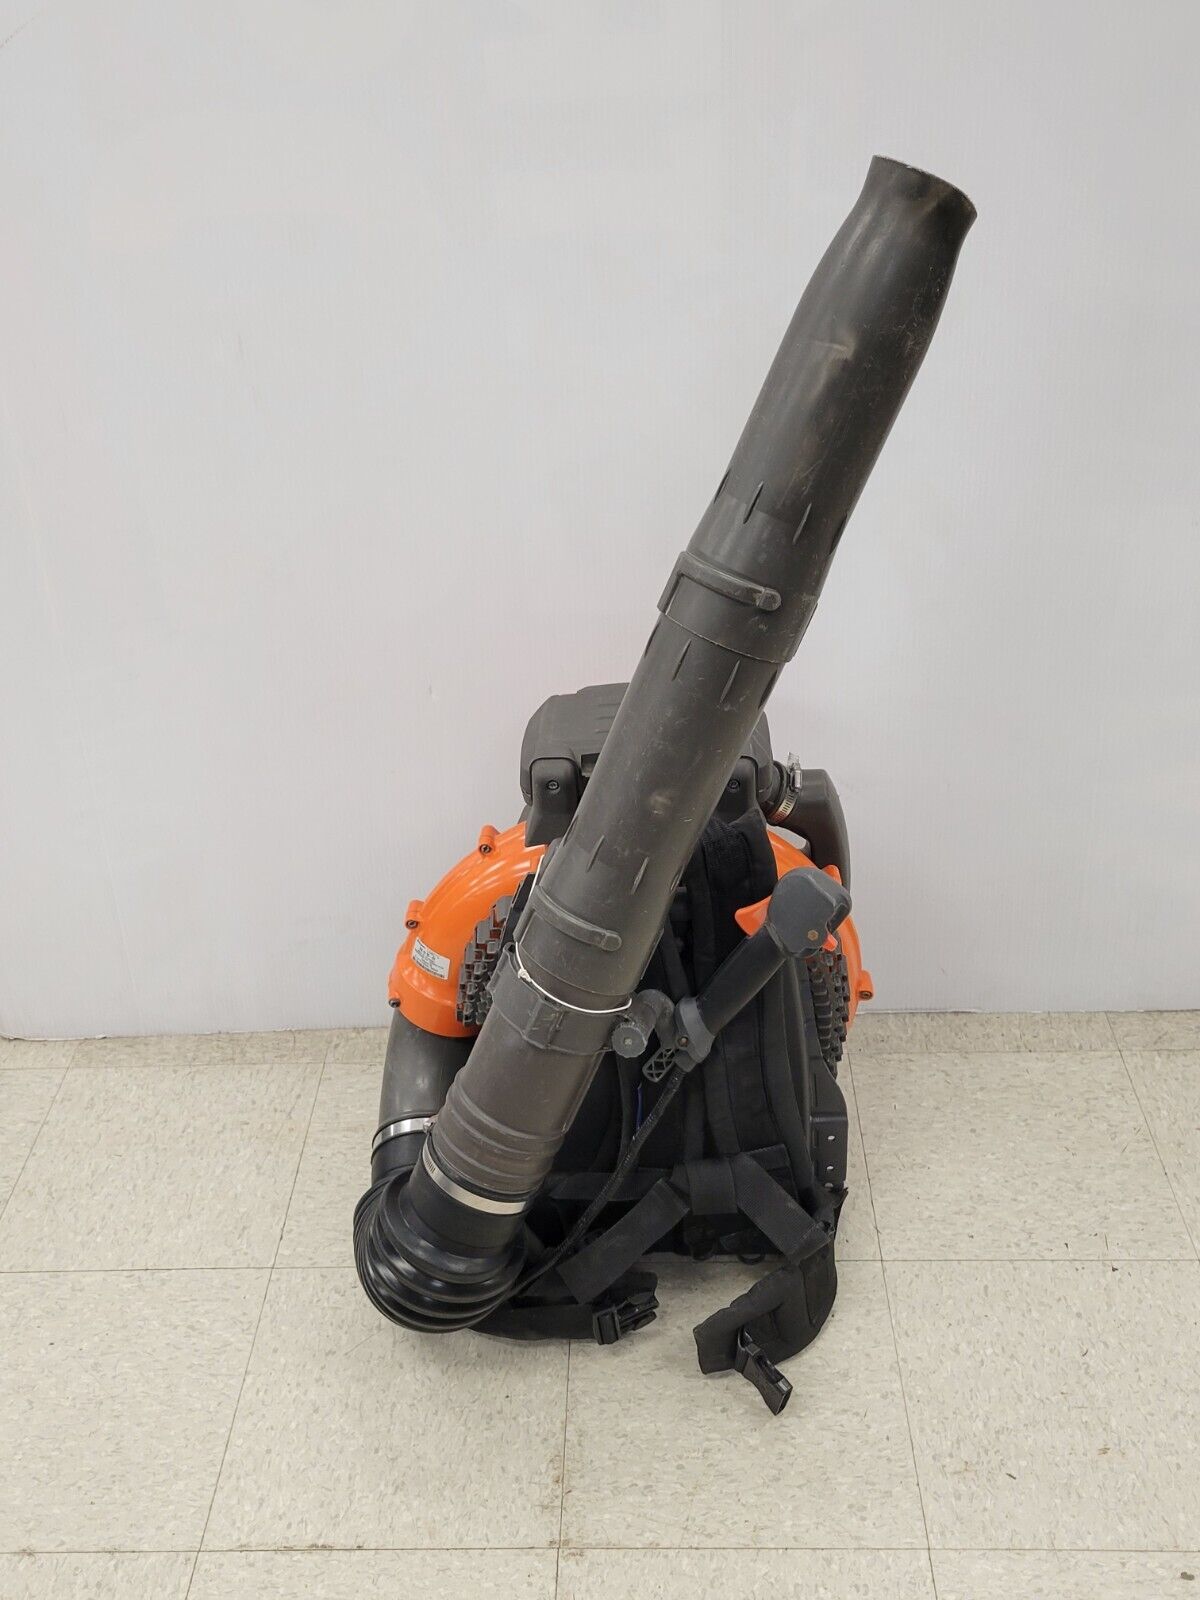 (57181-1) Husqvarna 58 OBTS Backpack Blower